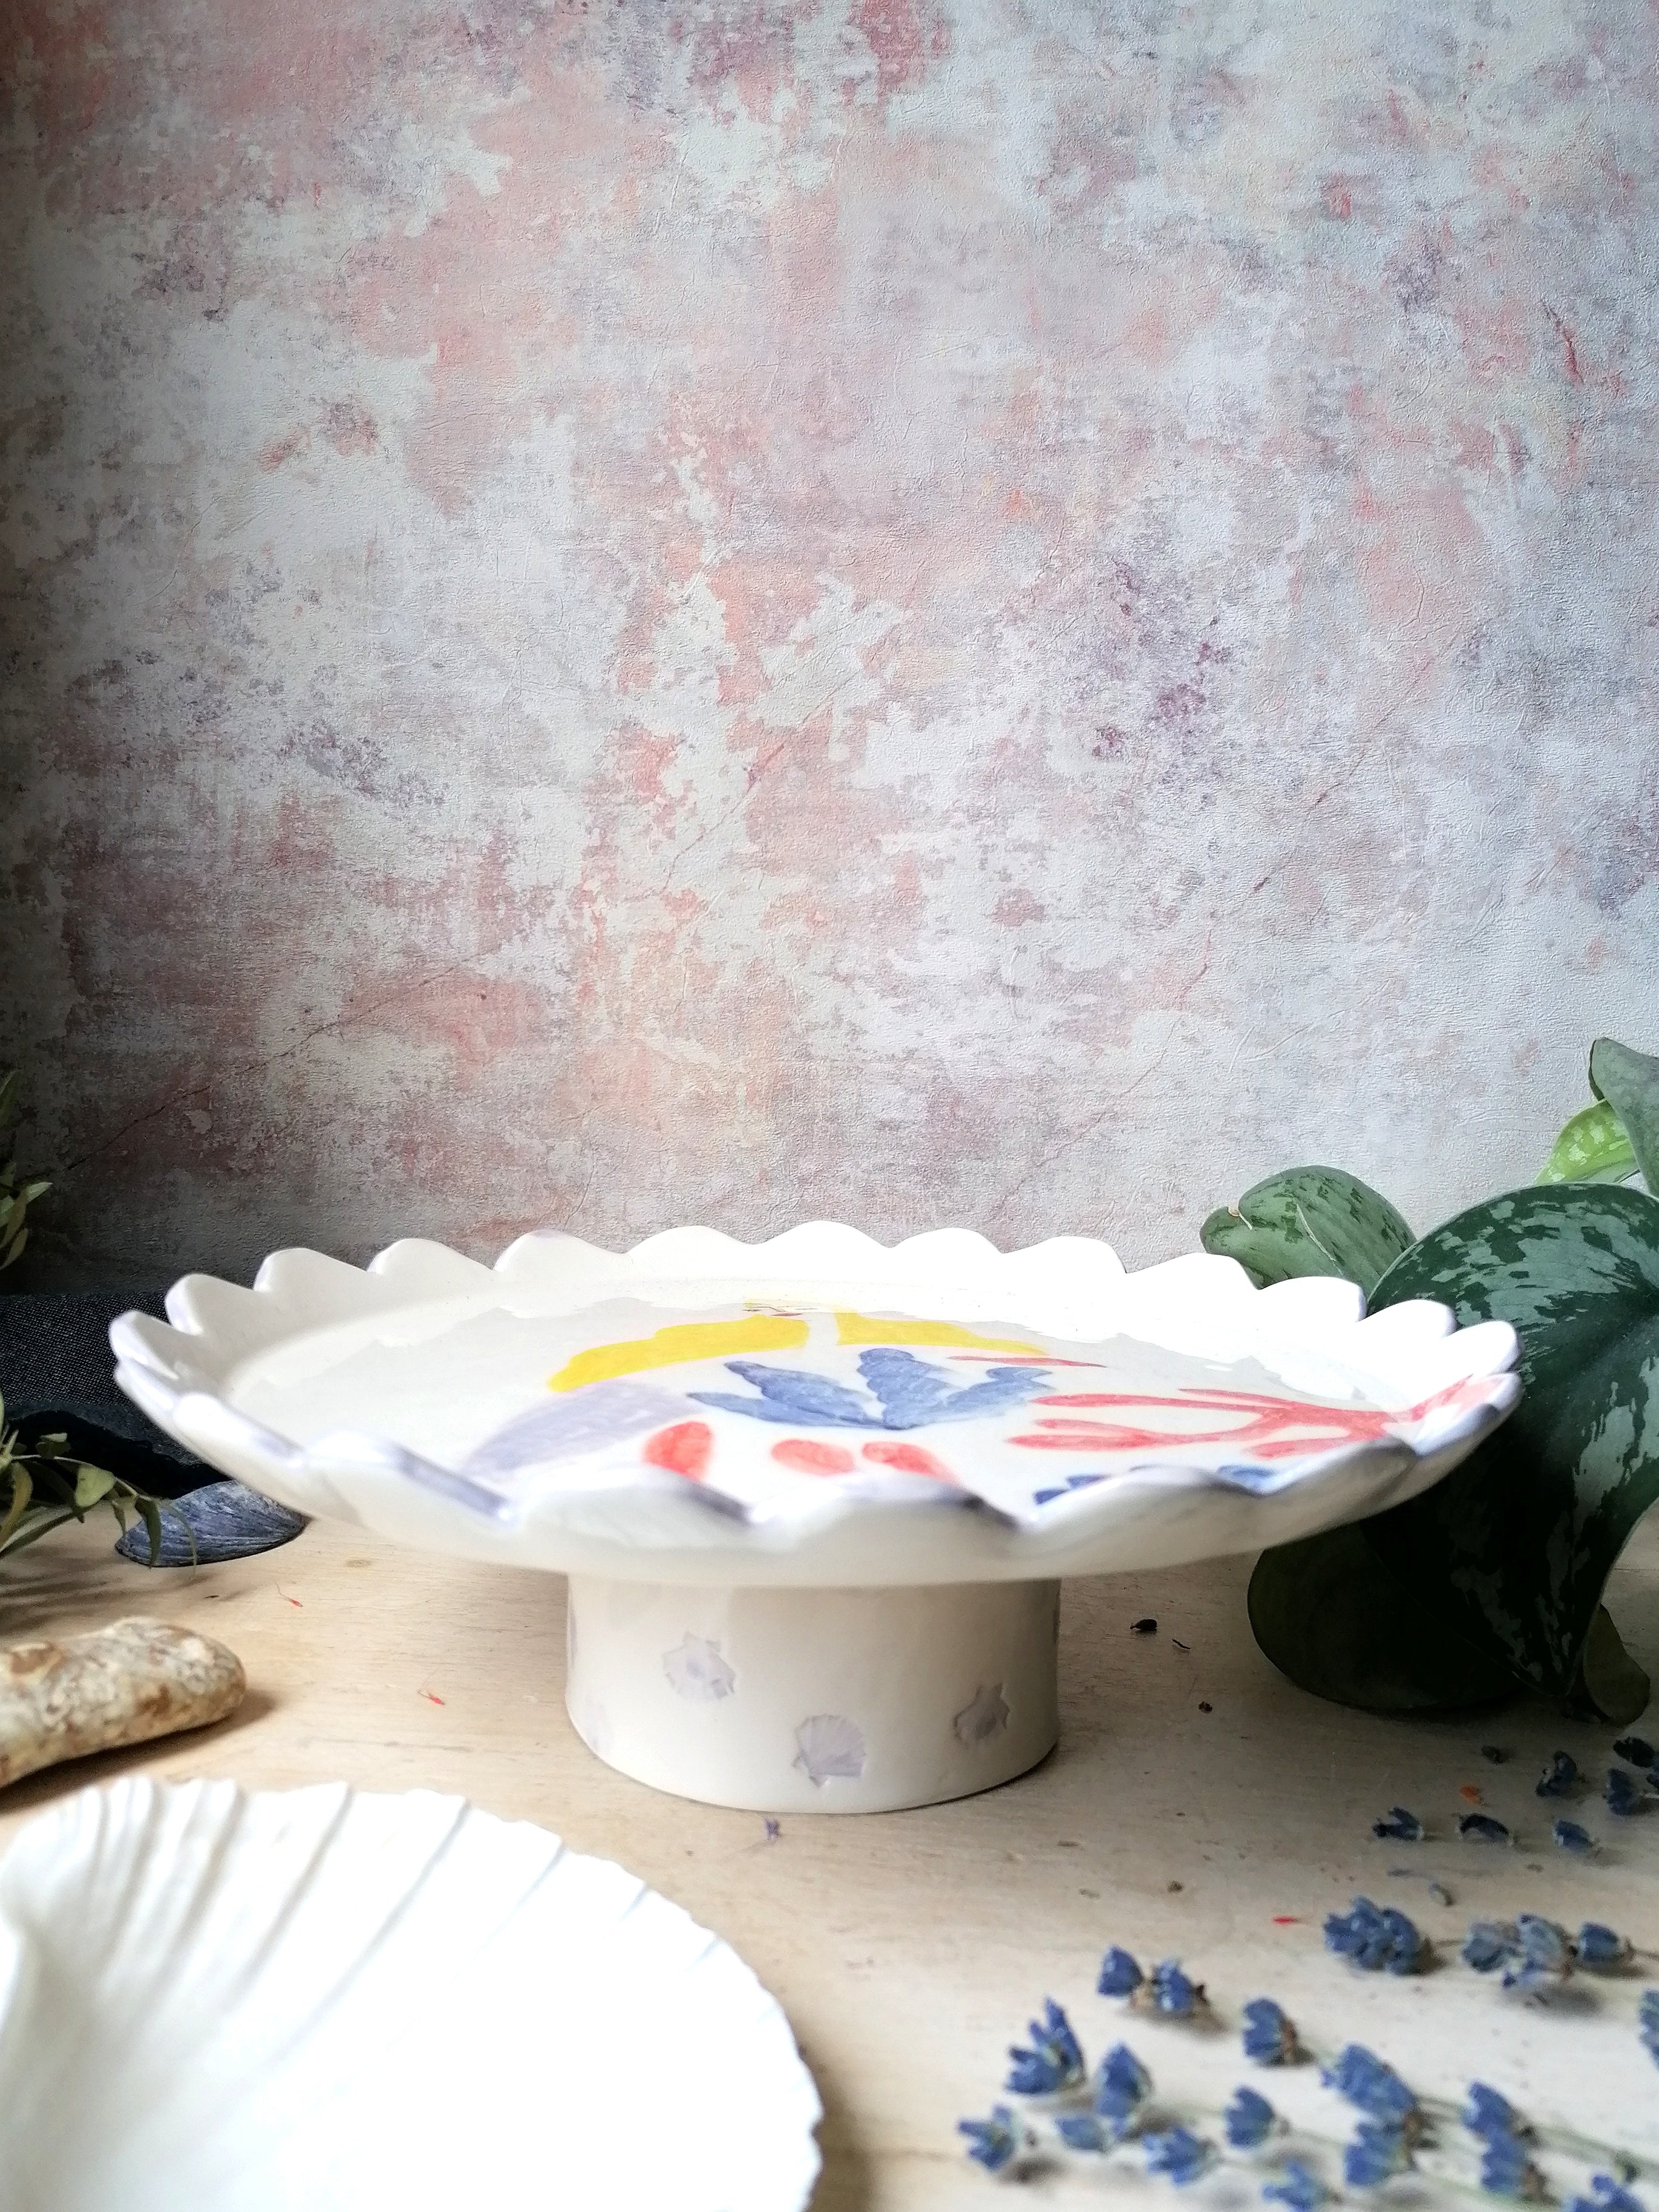 10-inch Ceramic Cake Stand by Martha Stewart